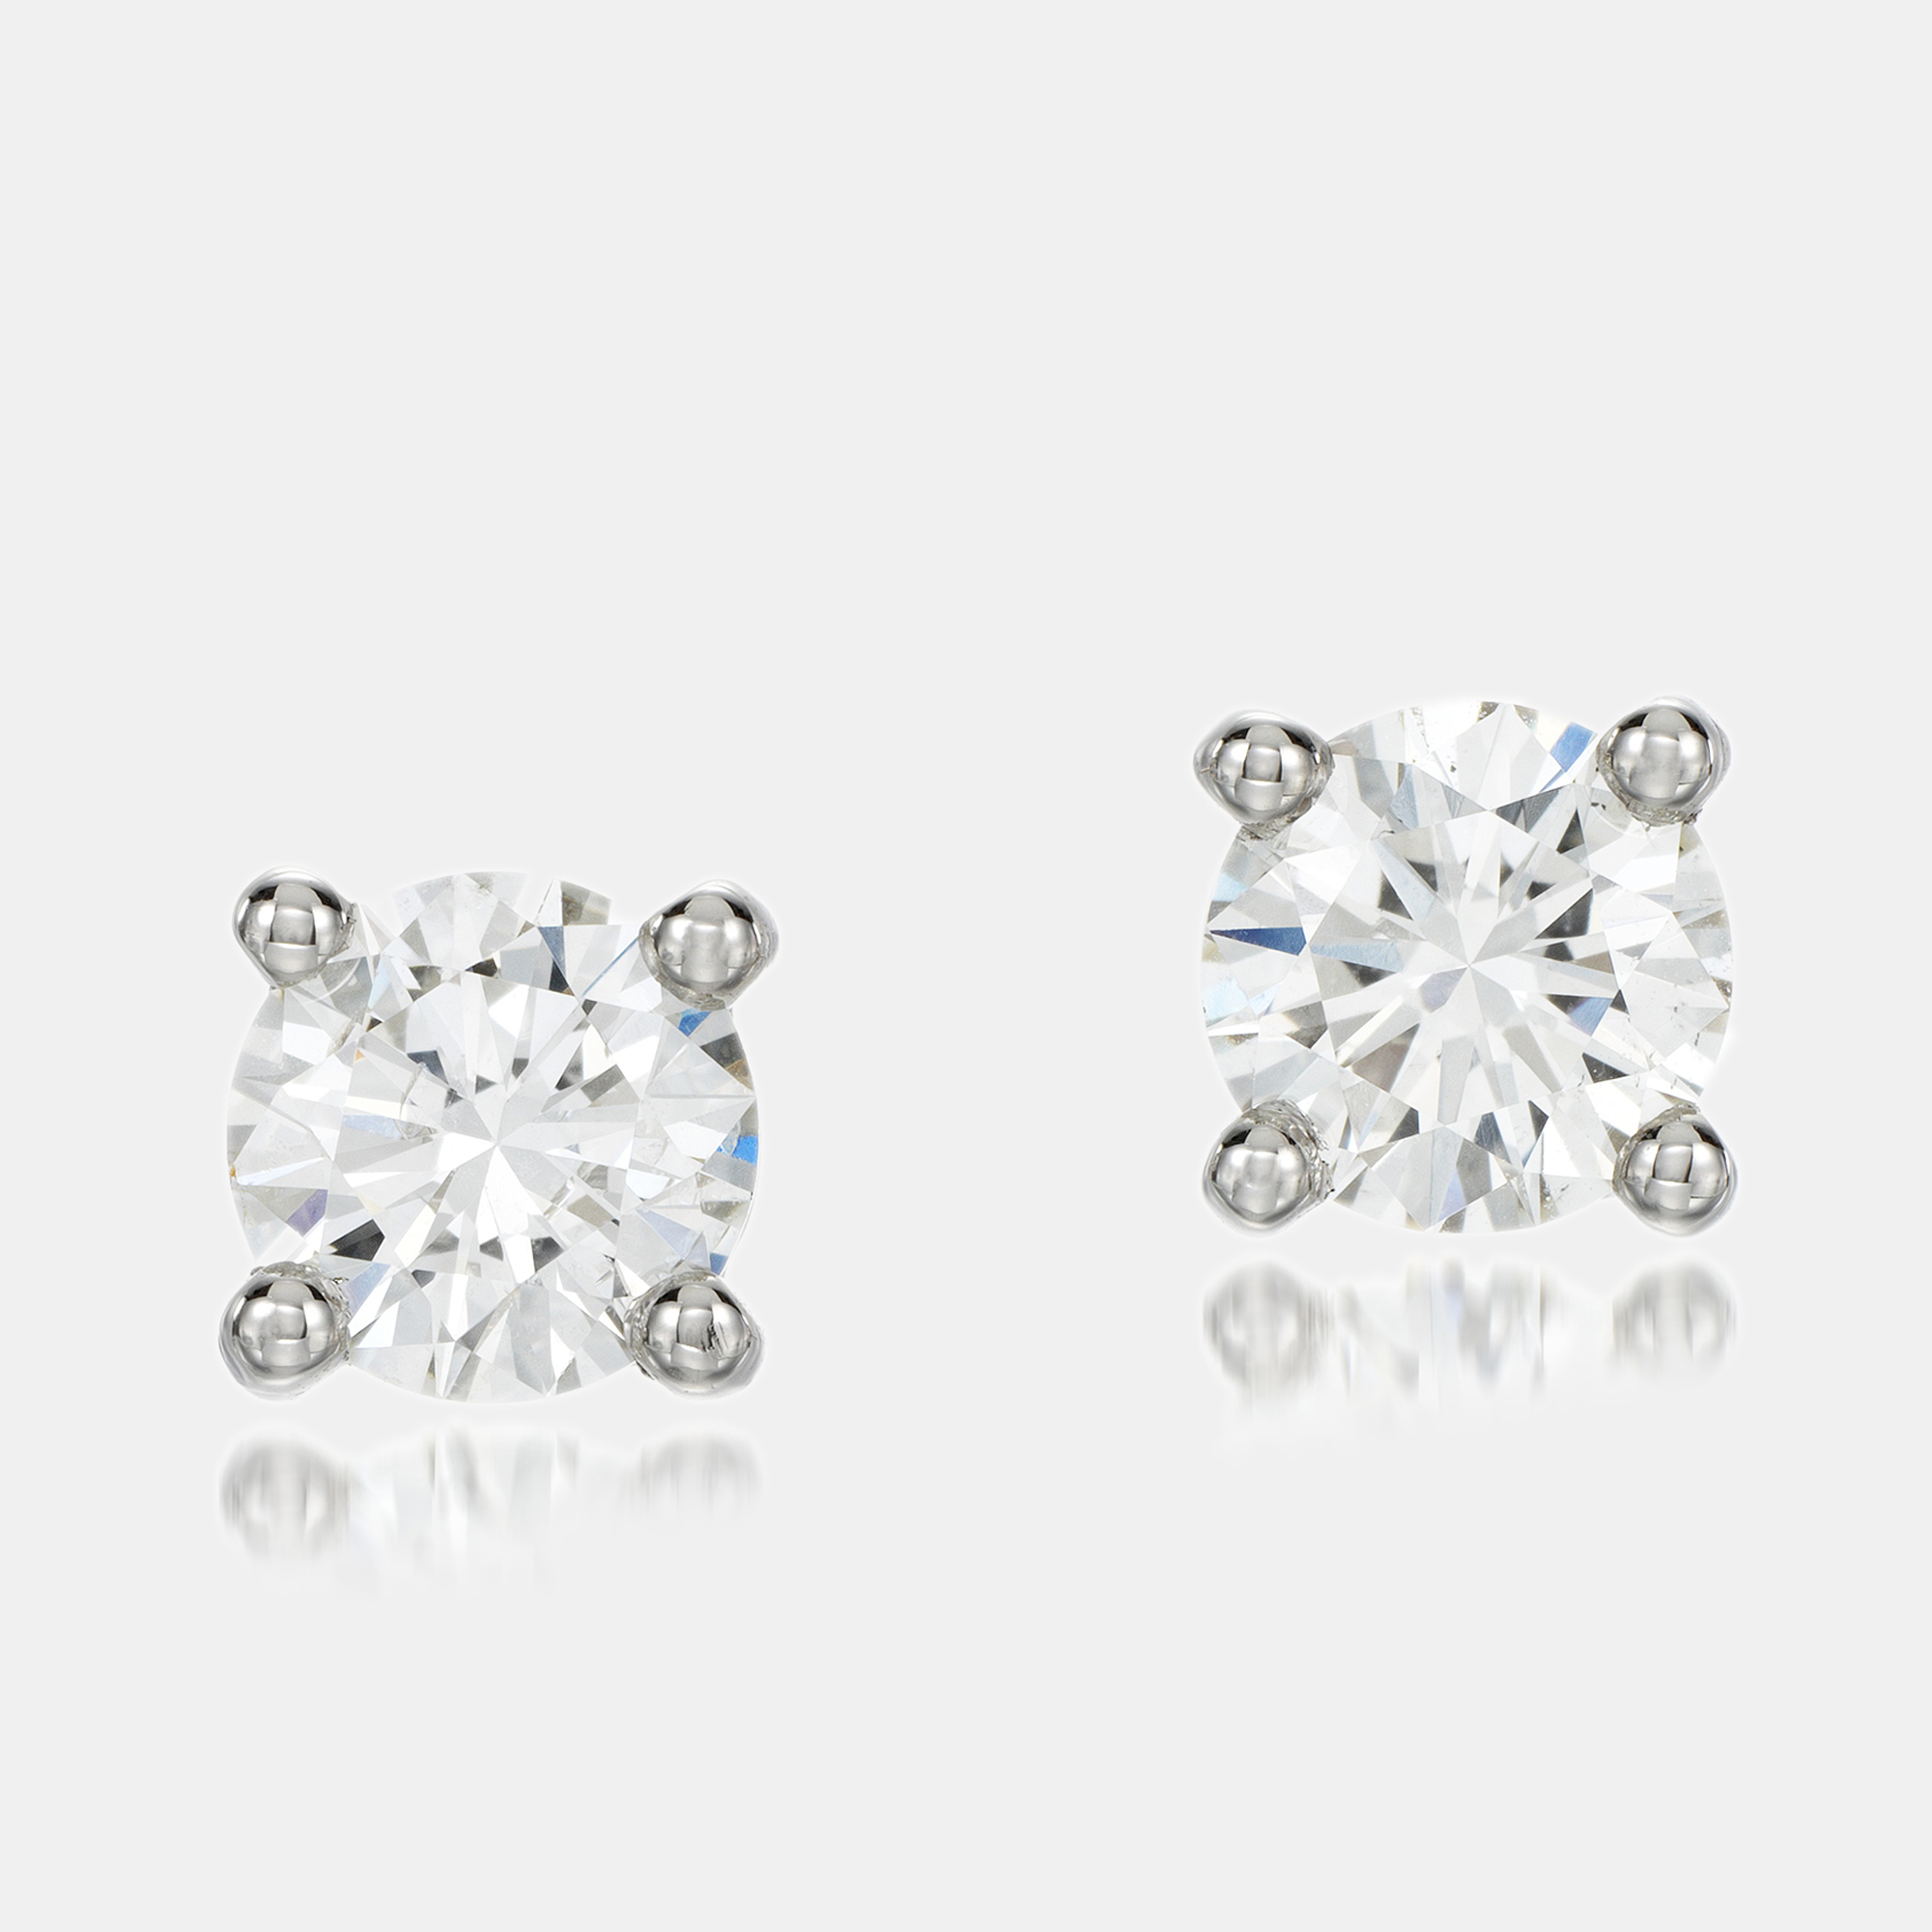 The diamond edit 18k white gold diamonds 1.40 ct. stud earrings